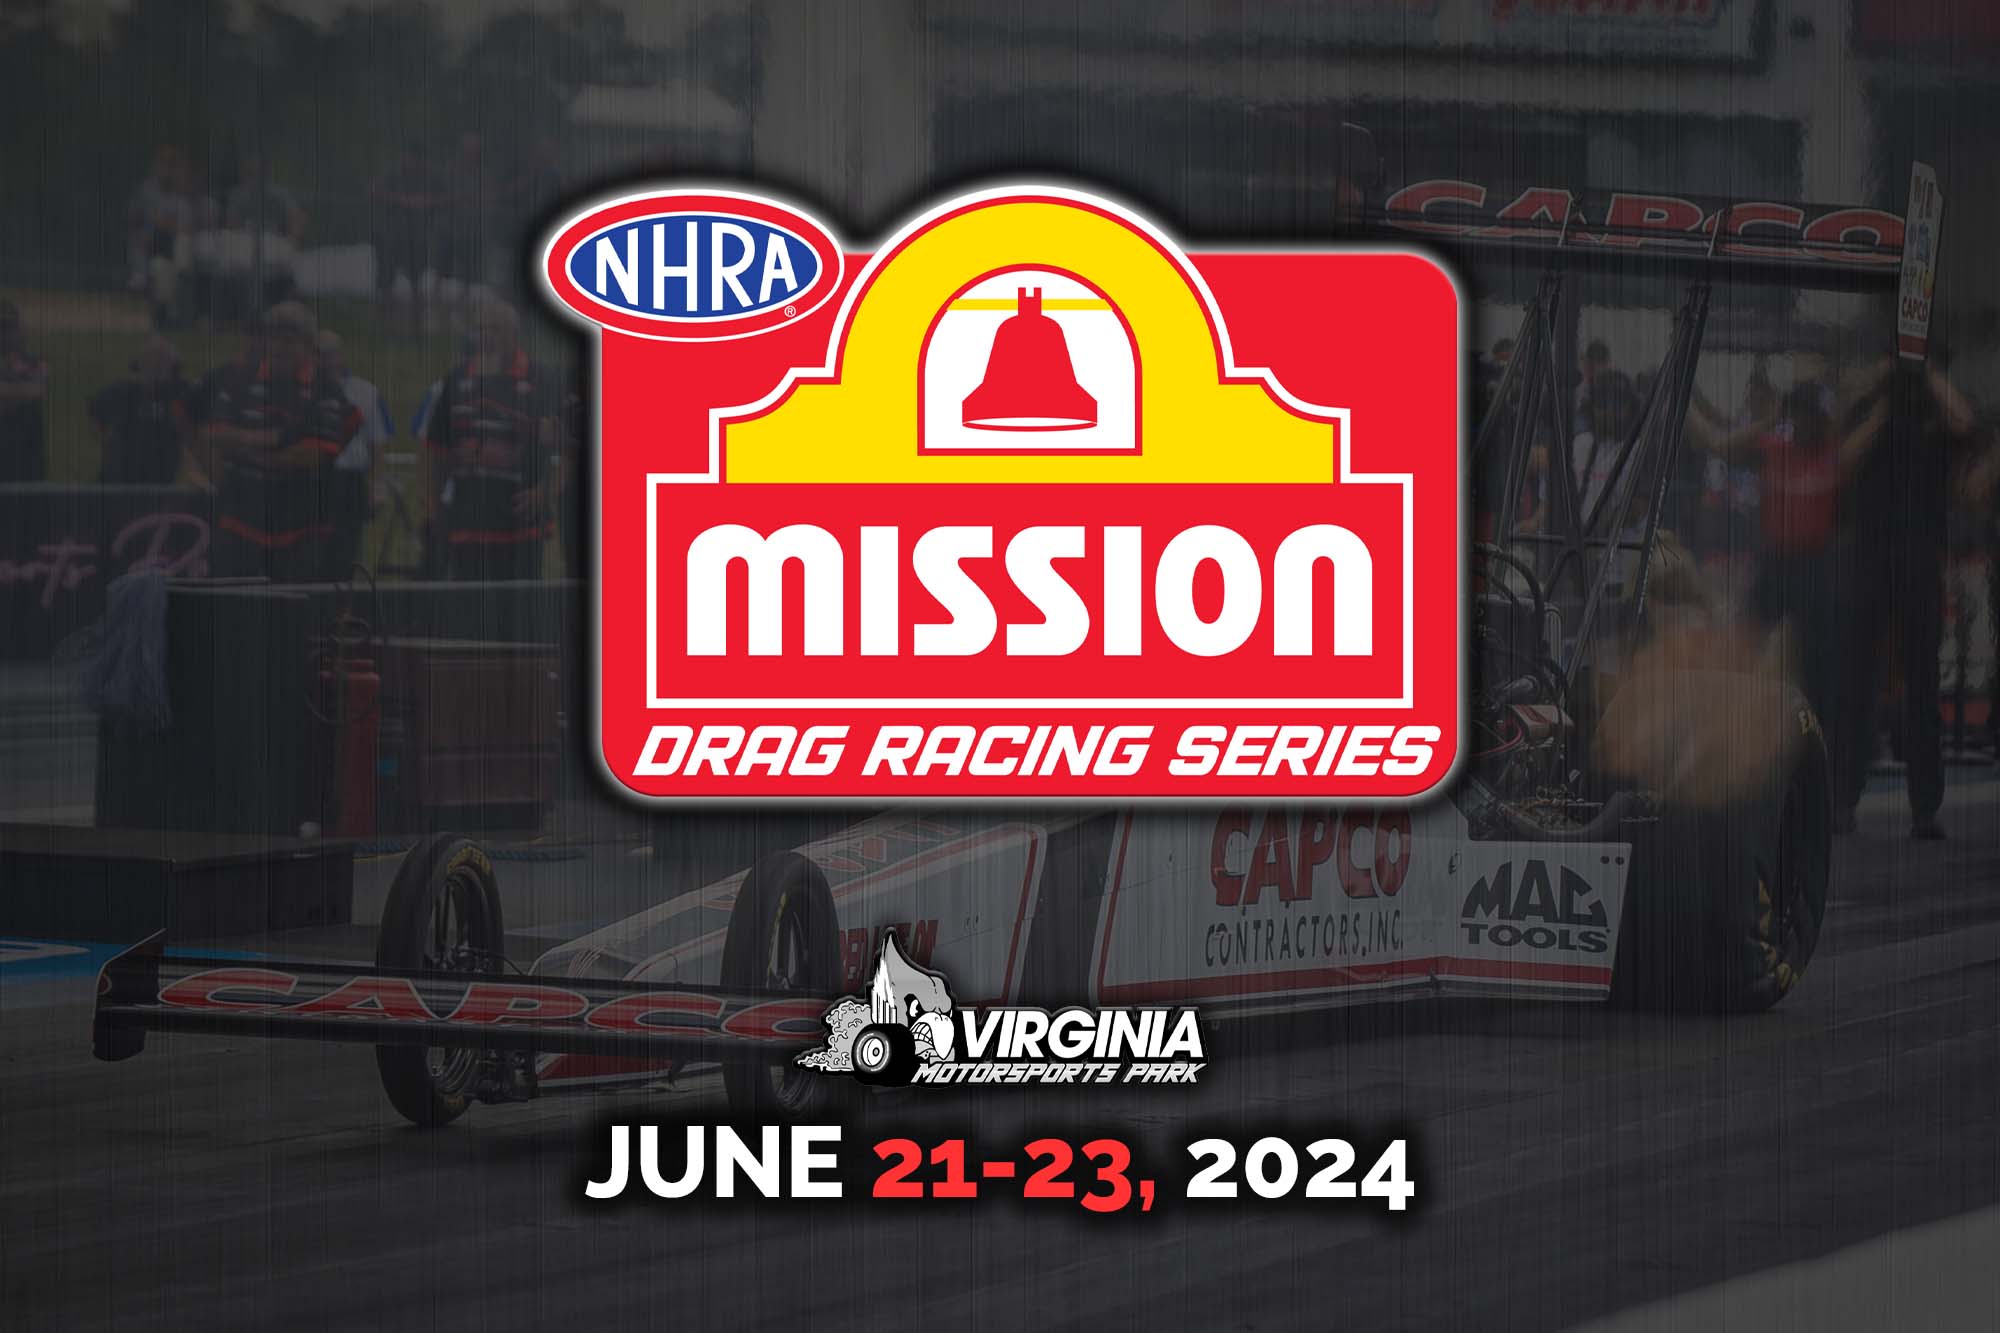 NHRA Set To Return to Popular Virginia Motorsports Park for Virginia NHRA Nationals in 2024